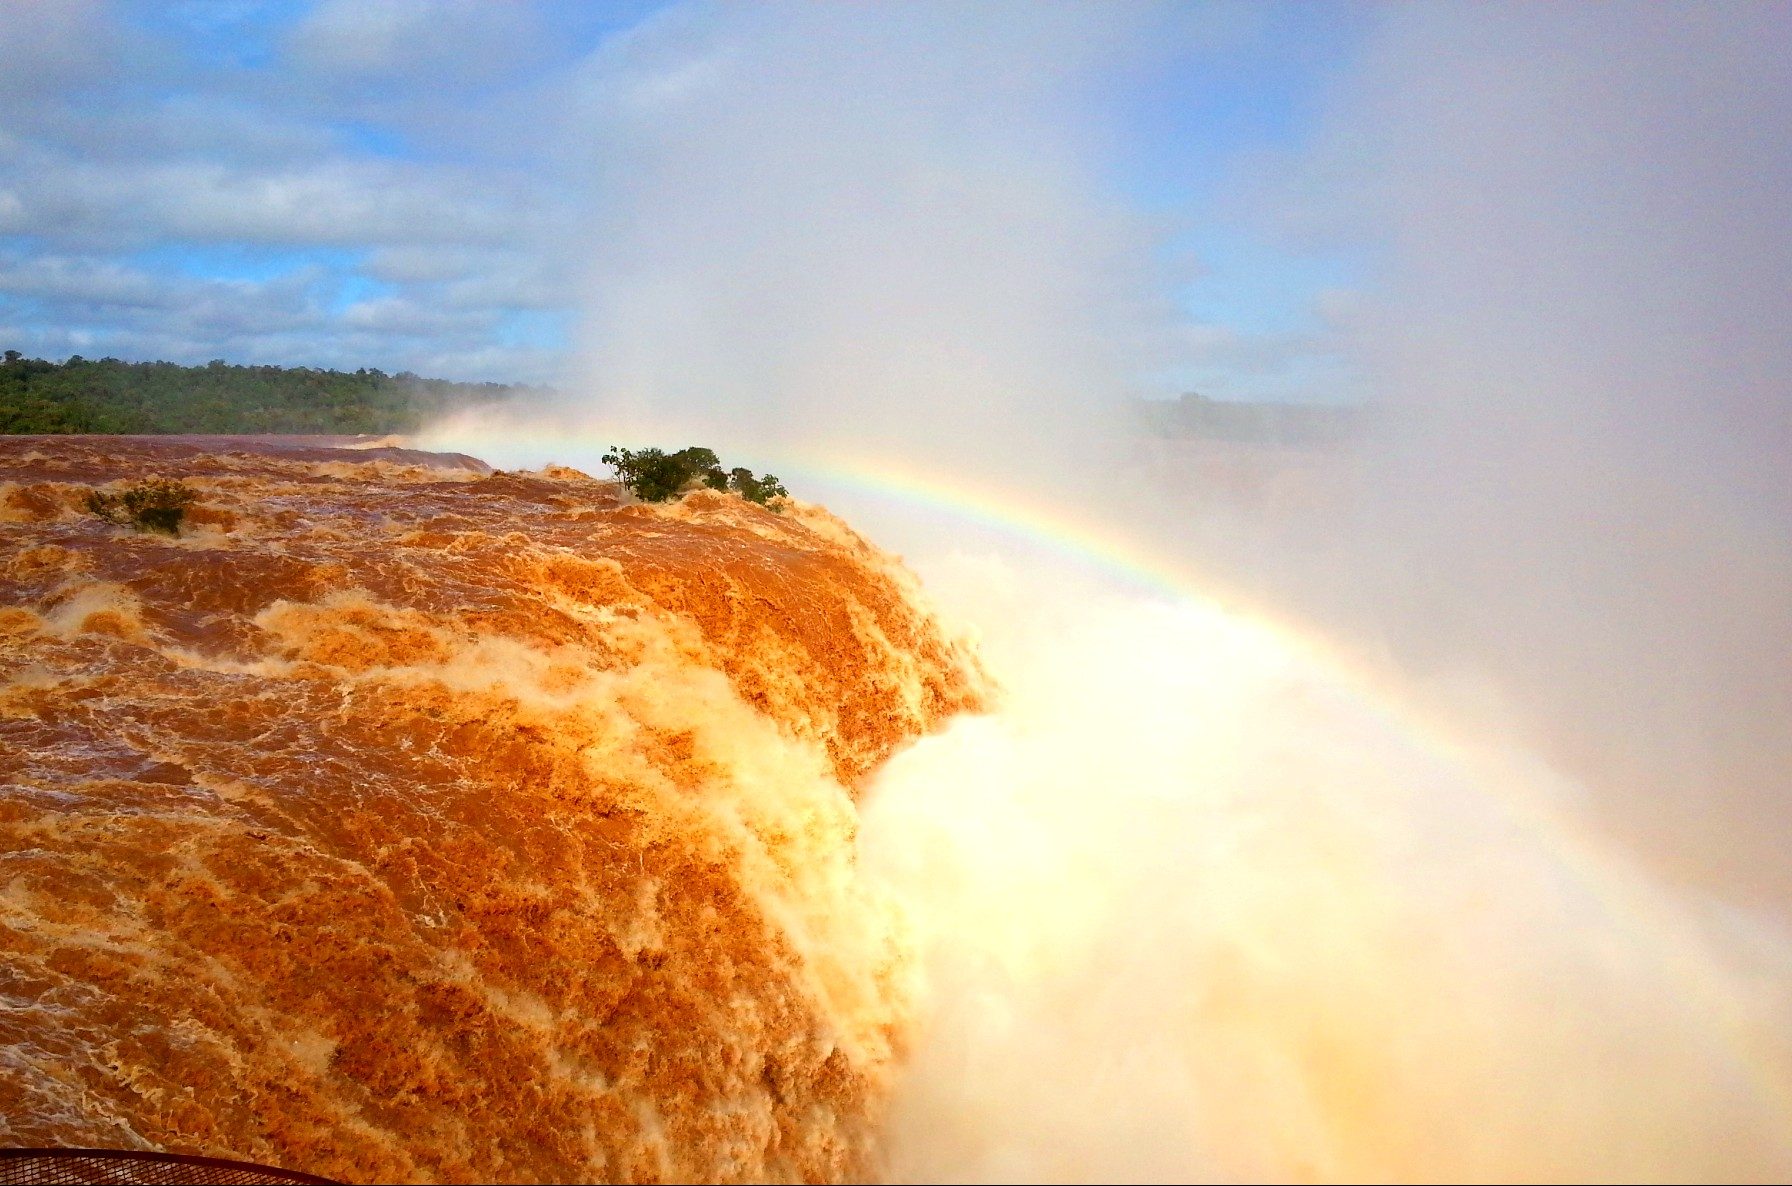 Foz do Iguaçu | İguazu Şelalaeri